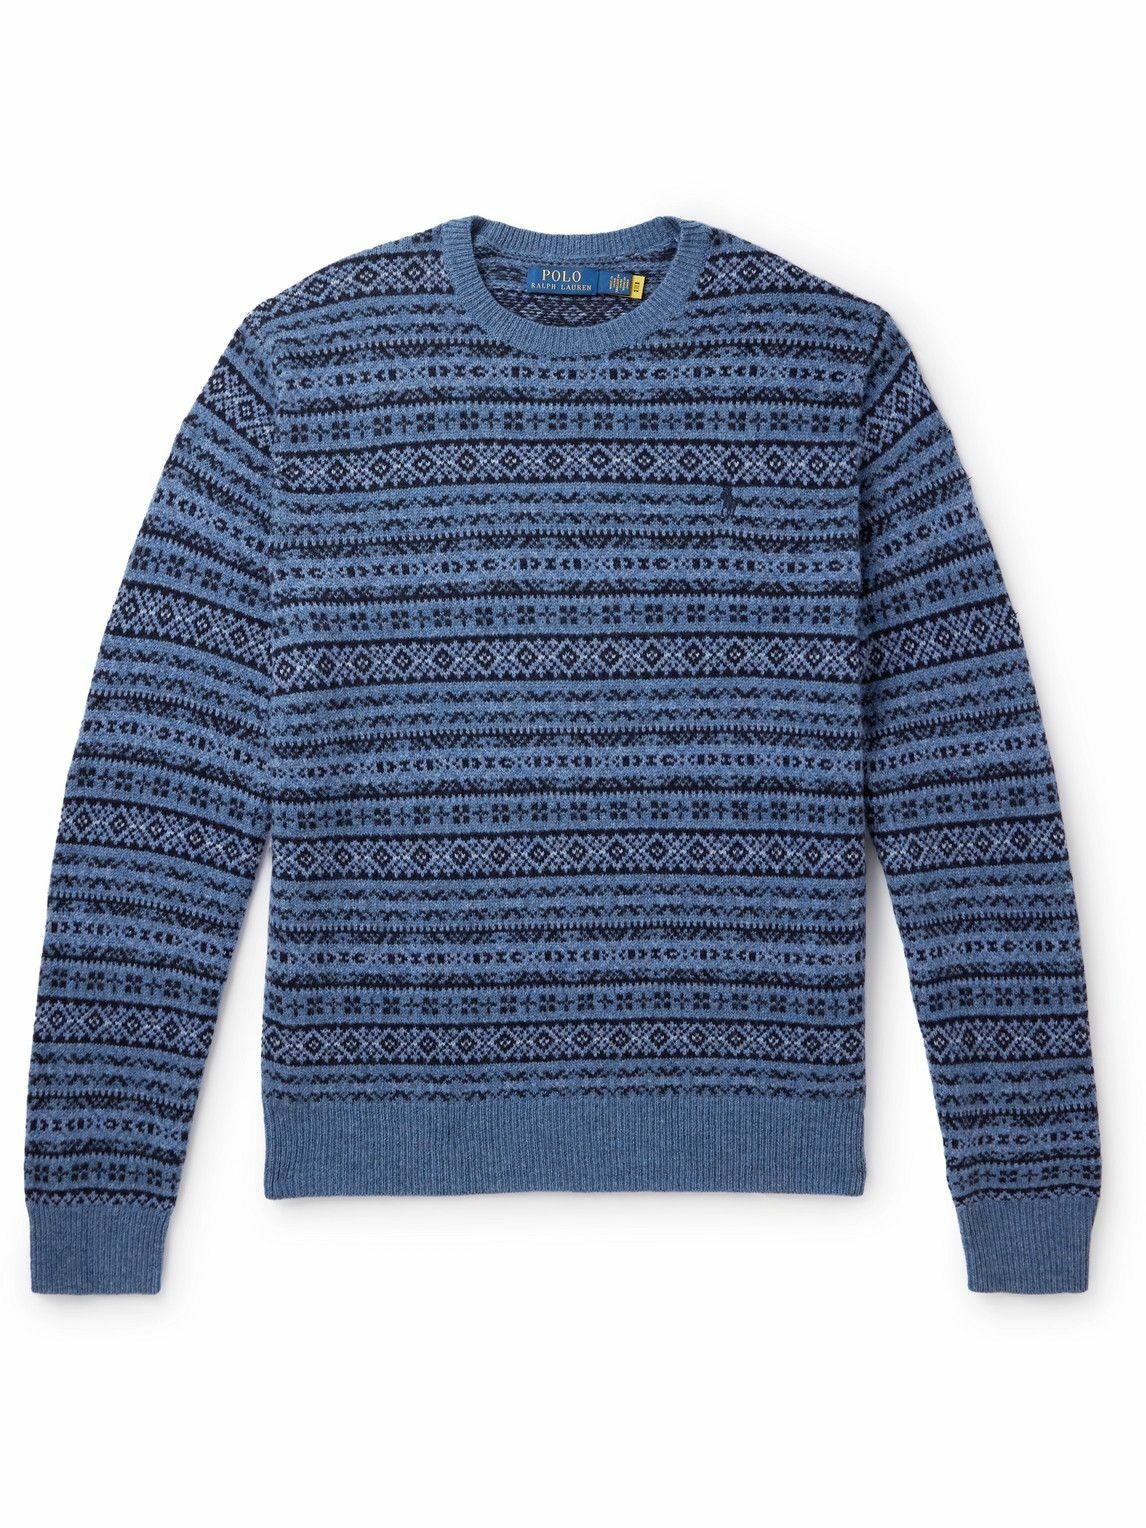 Polo Ralph Lauren - Fair Isle Wool Sweater - Blue Polo Ralph Lauren